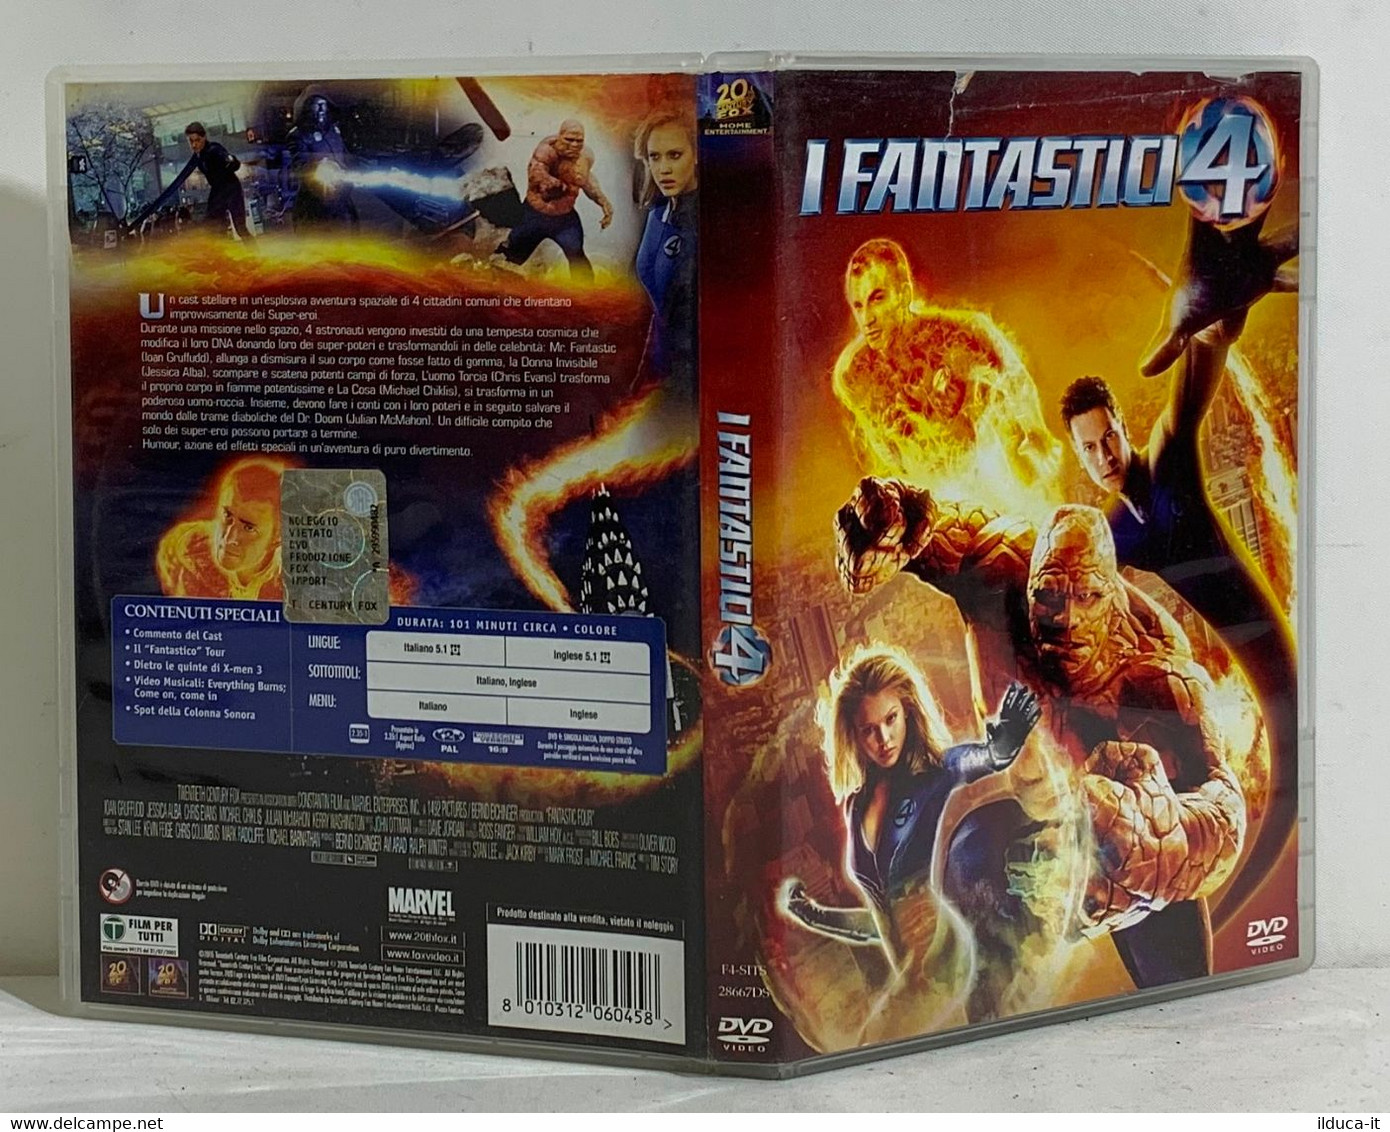 I100808 DVD - I Fantastici 4 (2005) - Jessica Alba / Chris Evans - Sciences-Fictions Et Fantaisie